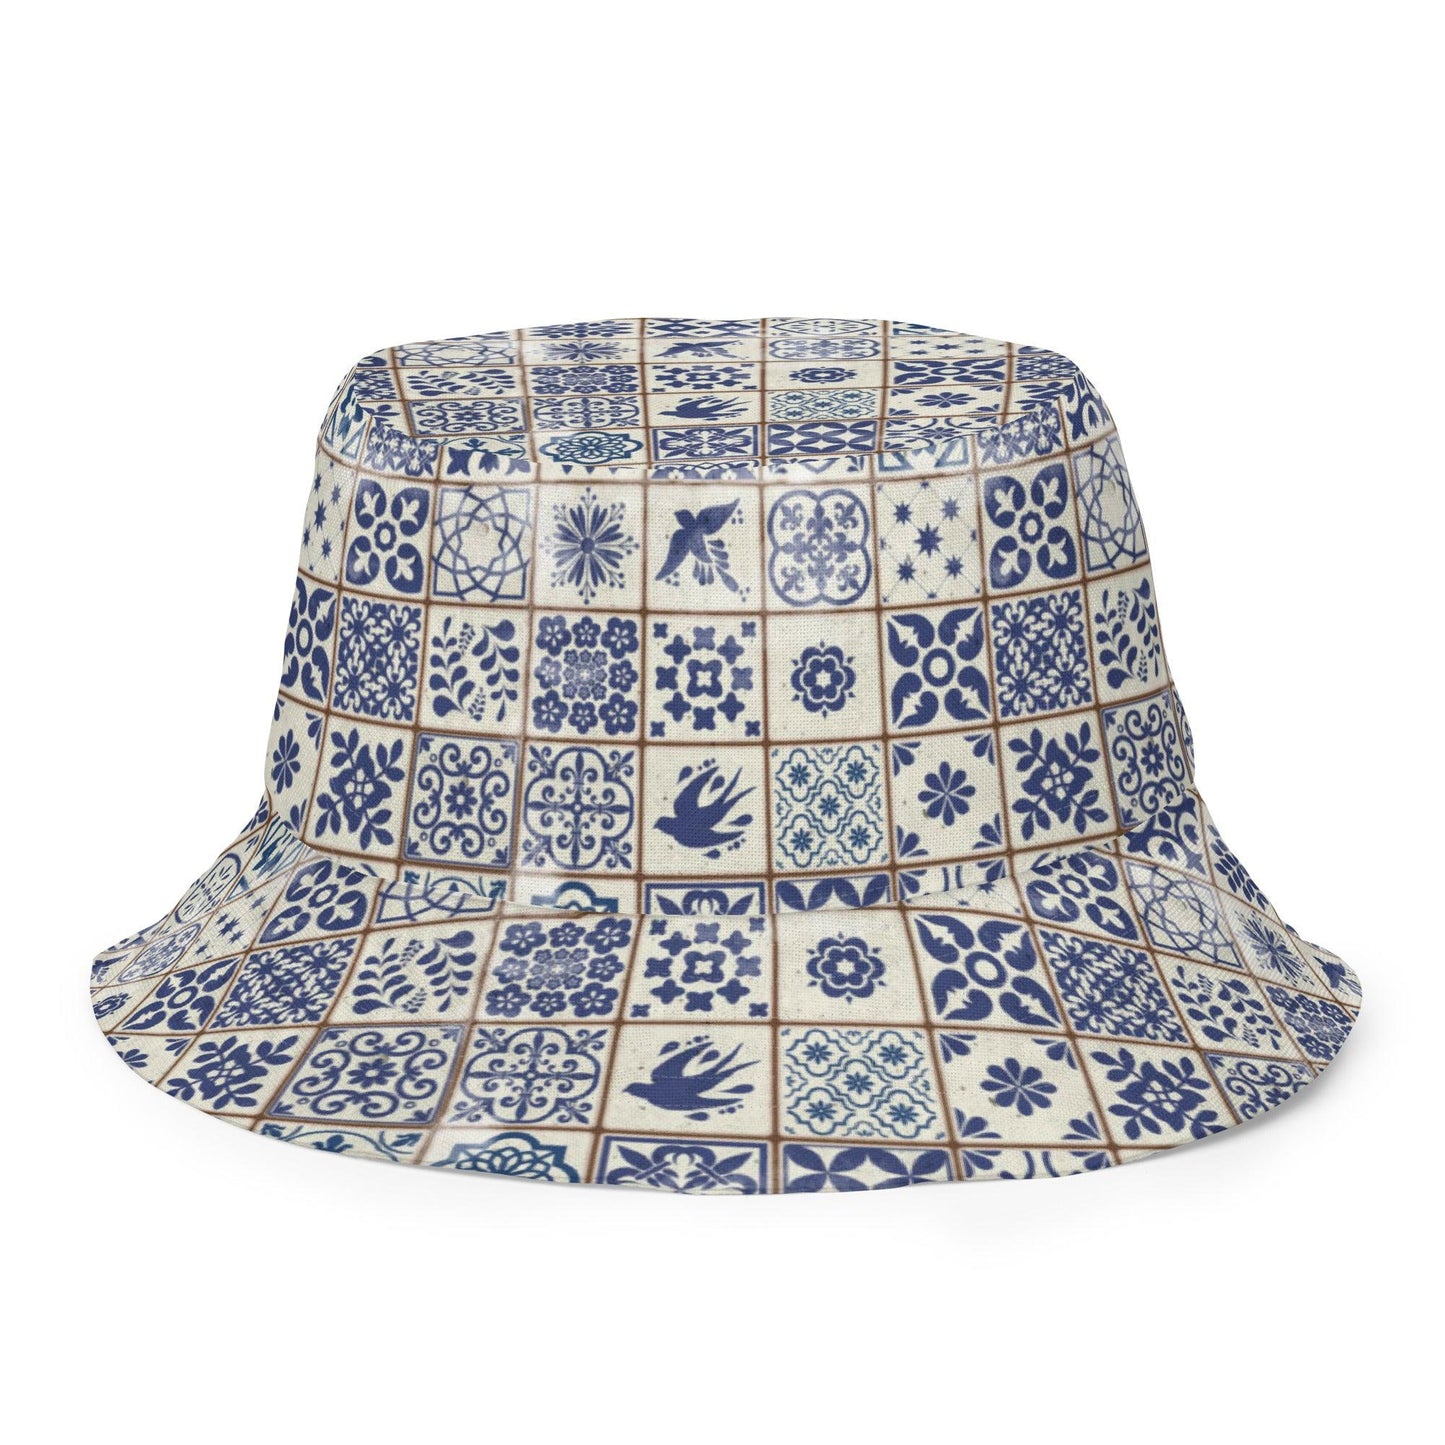 Portuguese Azulejo Tile Reversible Bucket Hat - The Global Wanderer